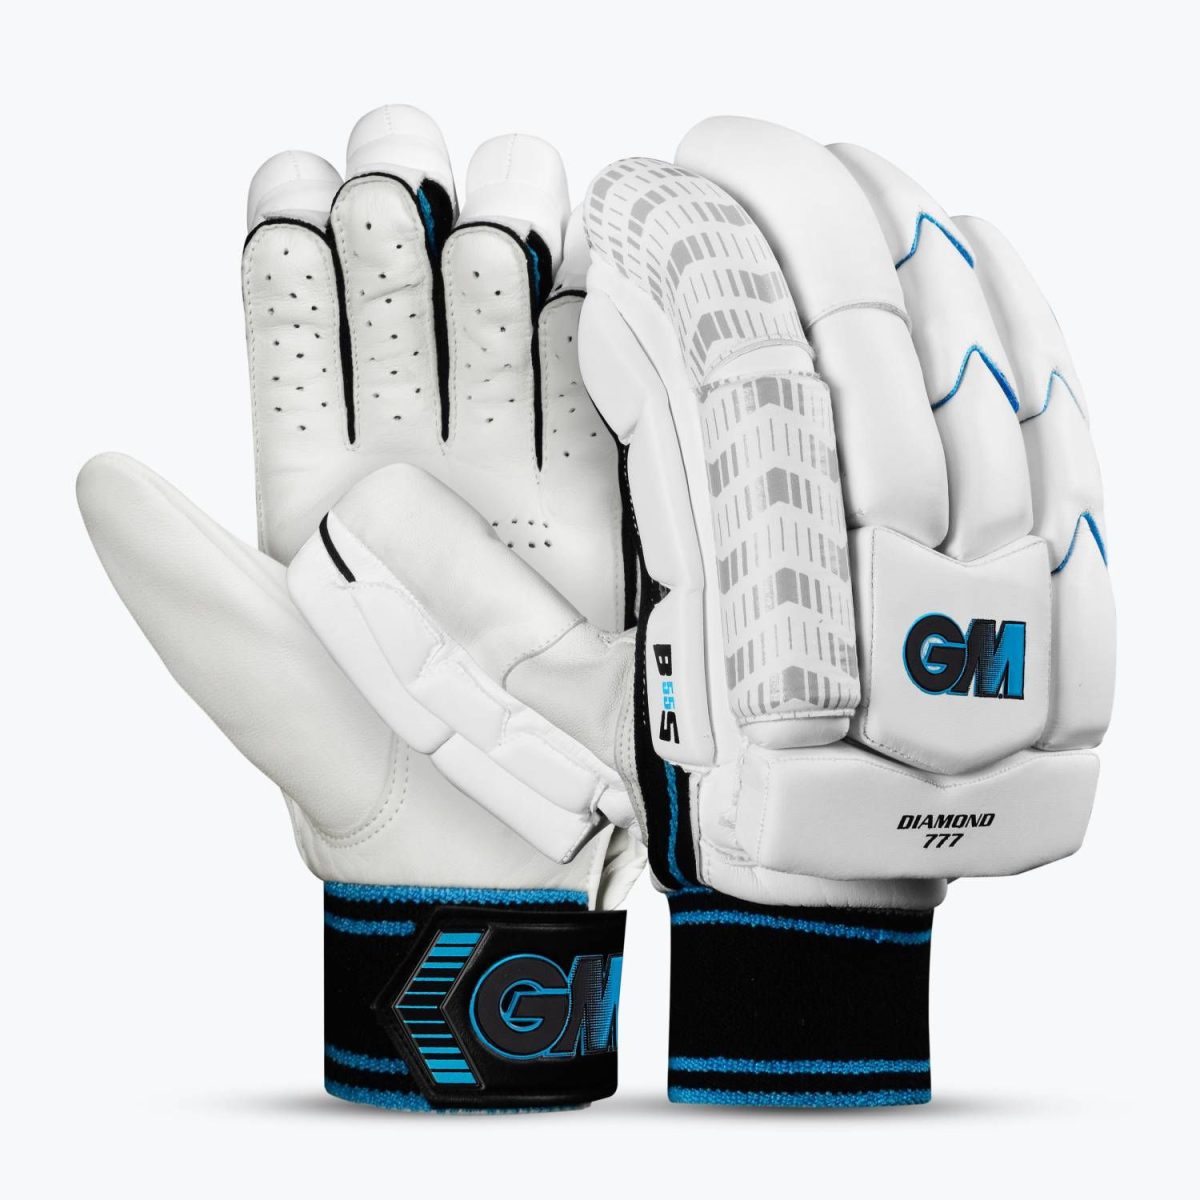 GM Diamond 777 Batting Gloves - MENS